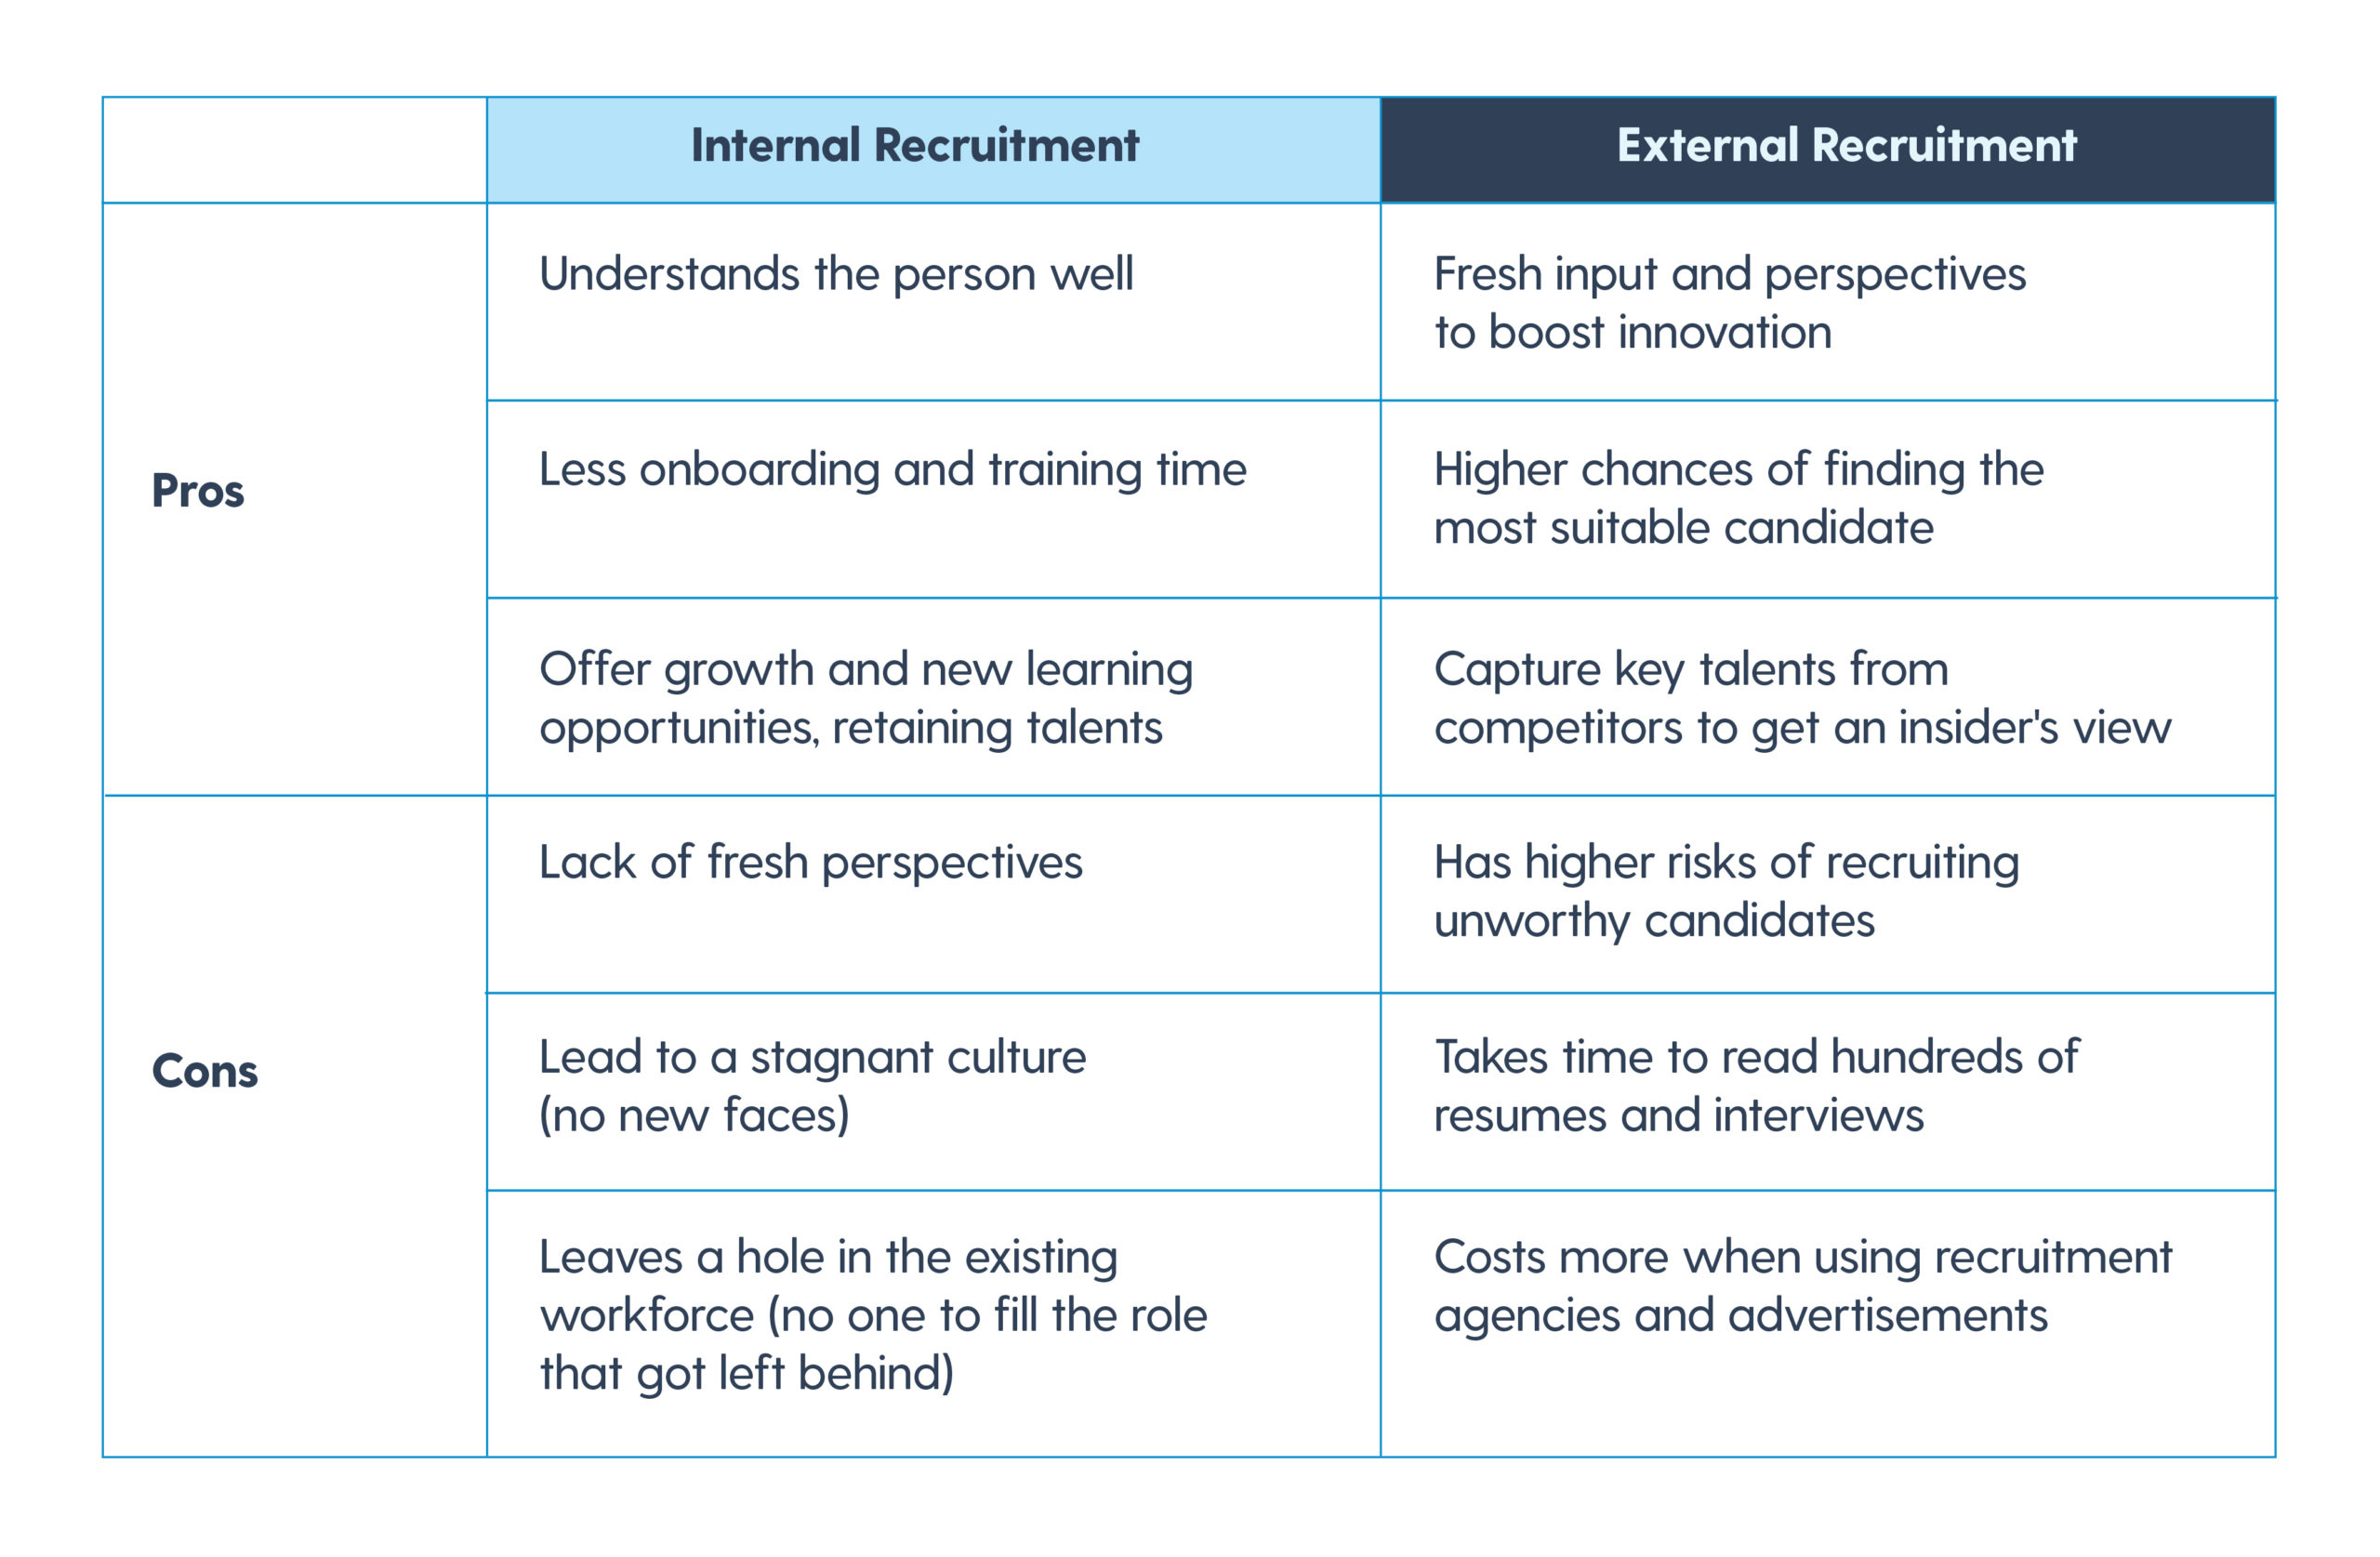 When should you hire internally? Plus 5 innovative internal recruitment methods